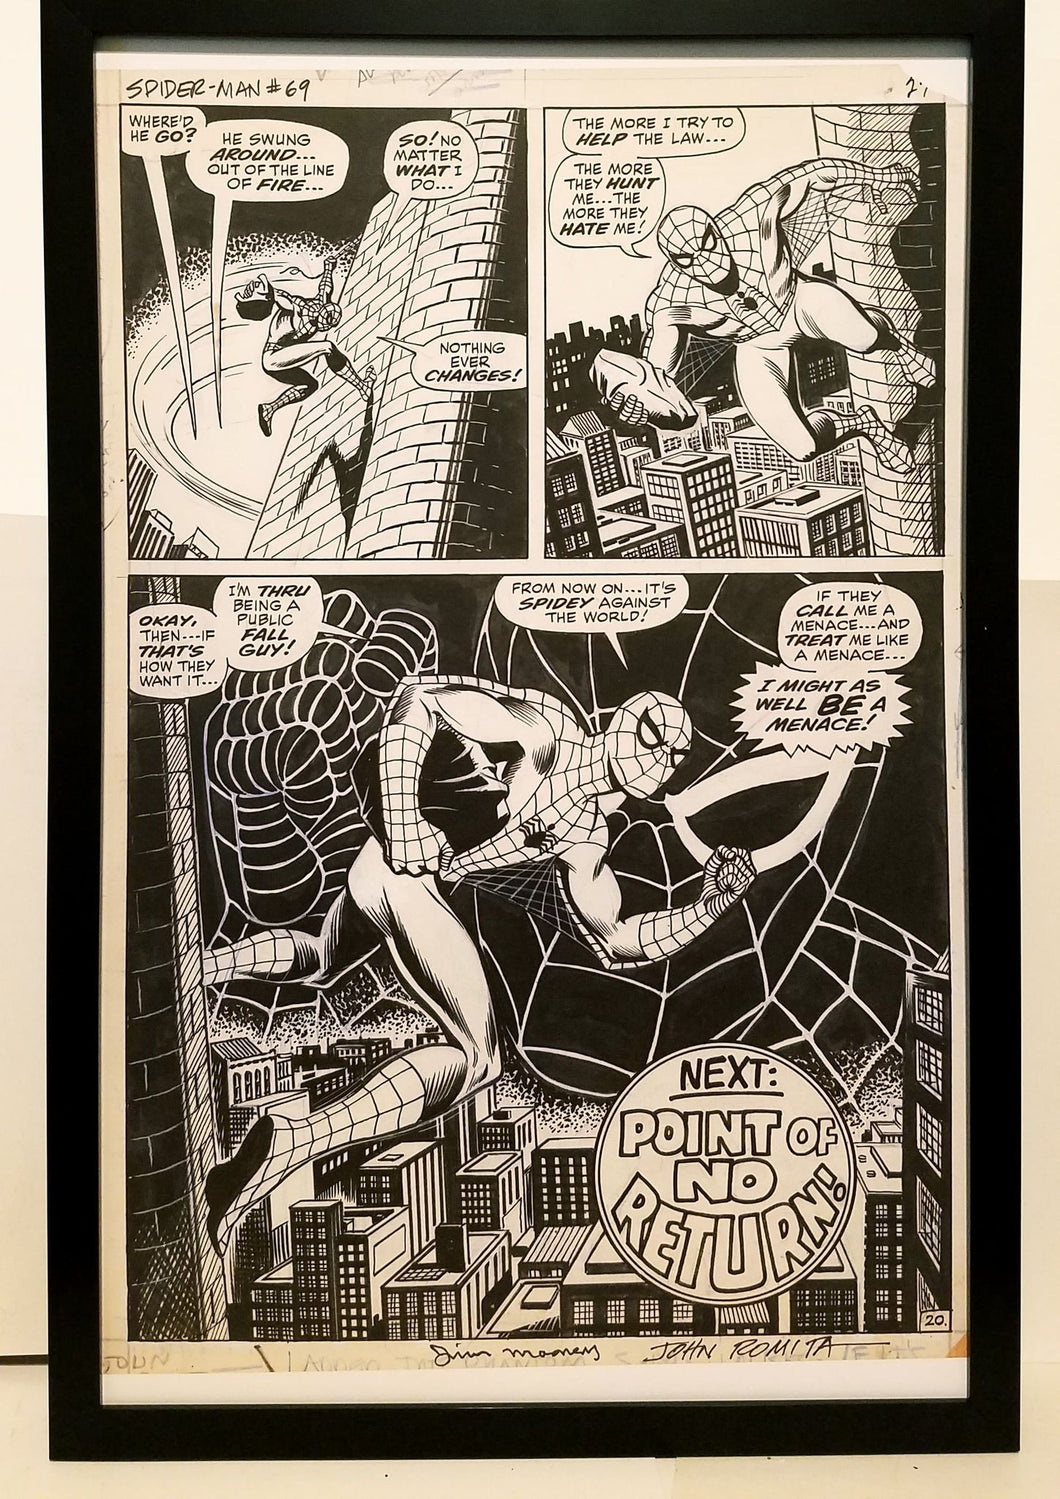 Amazing Spider-Man #69 pg. 20 John Romita 11x17 FRAMED Original Art Poster Marvel Comics